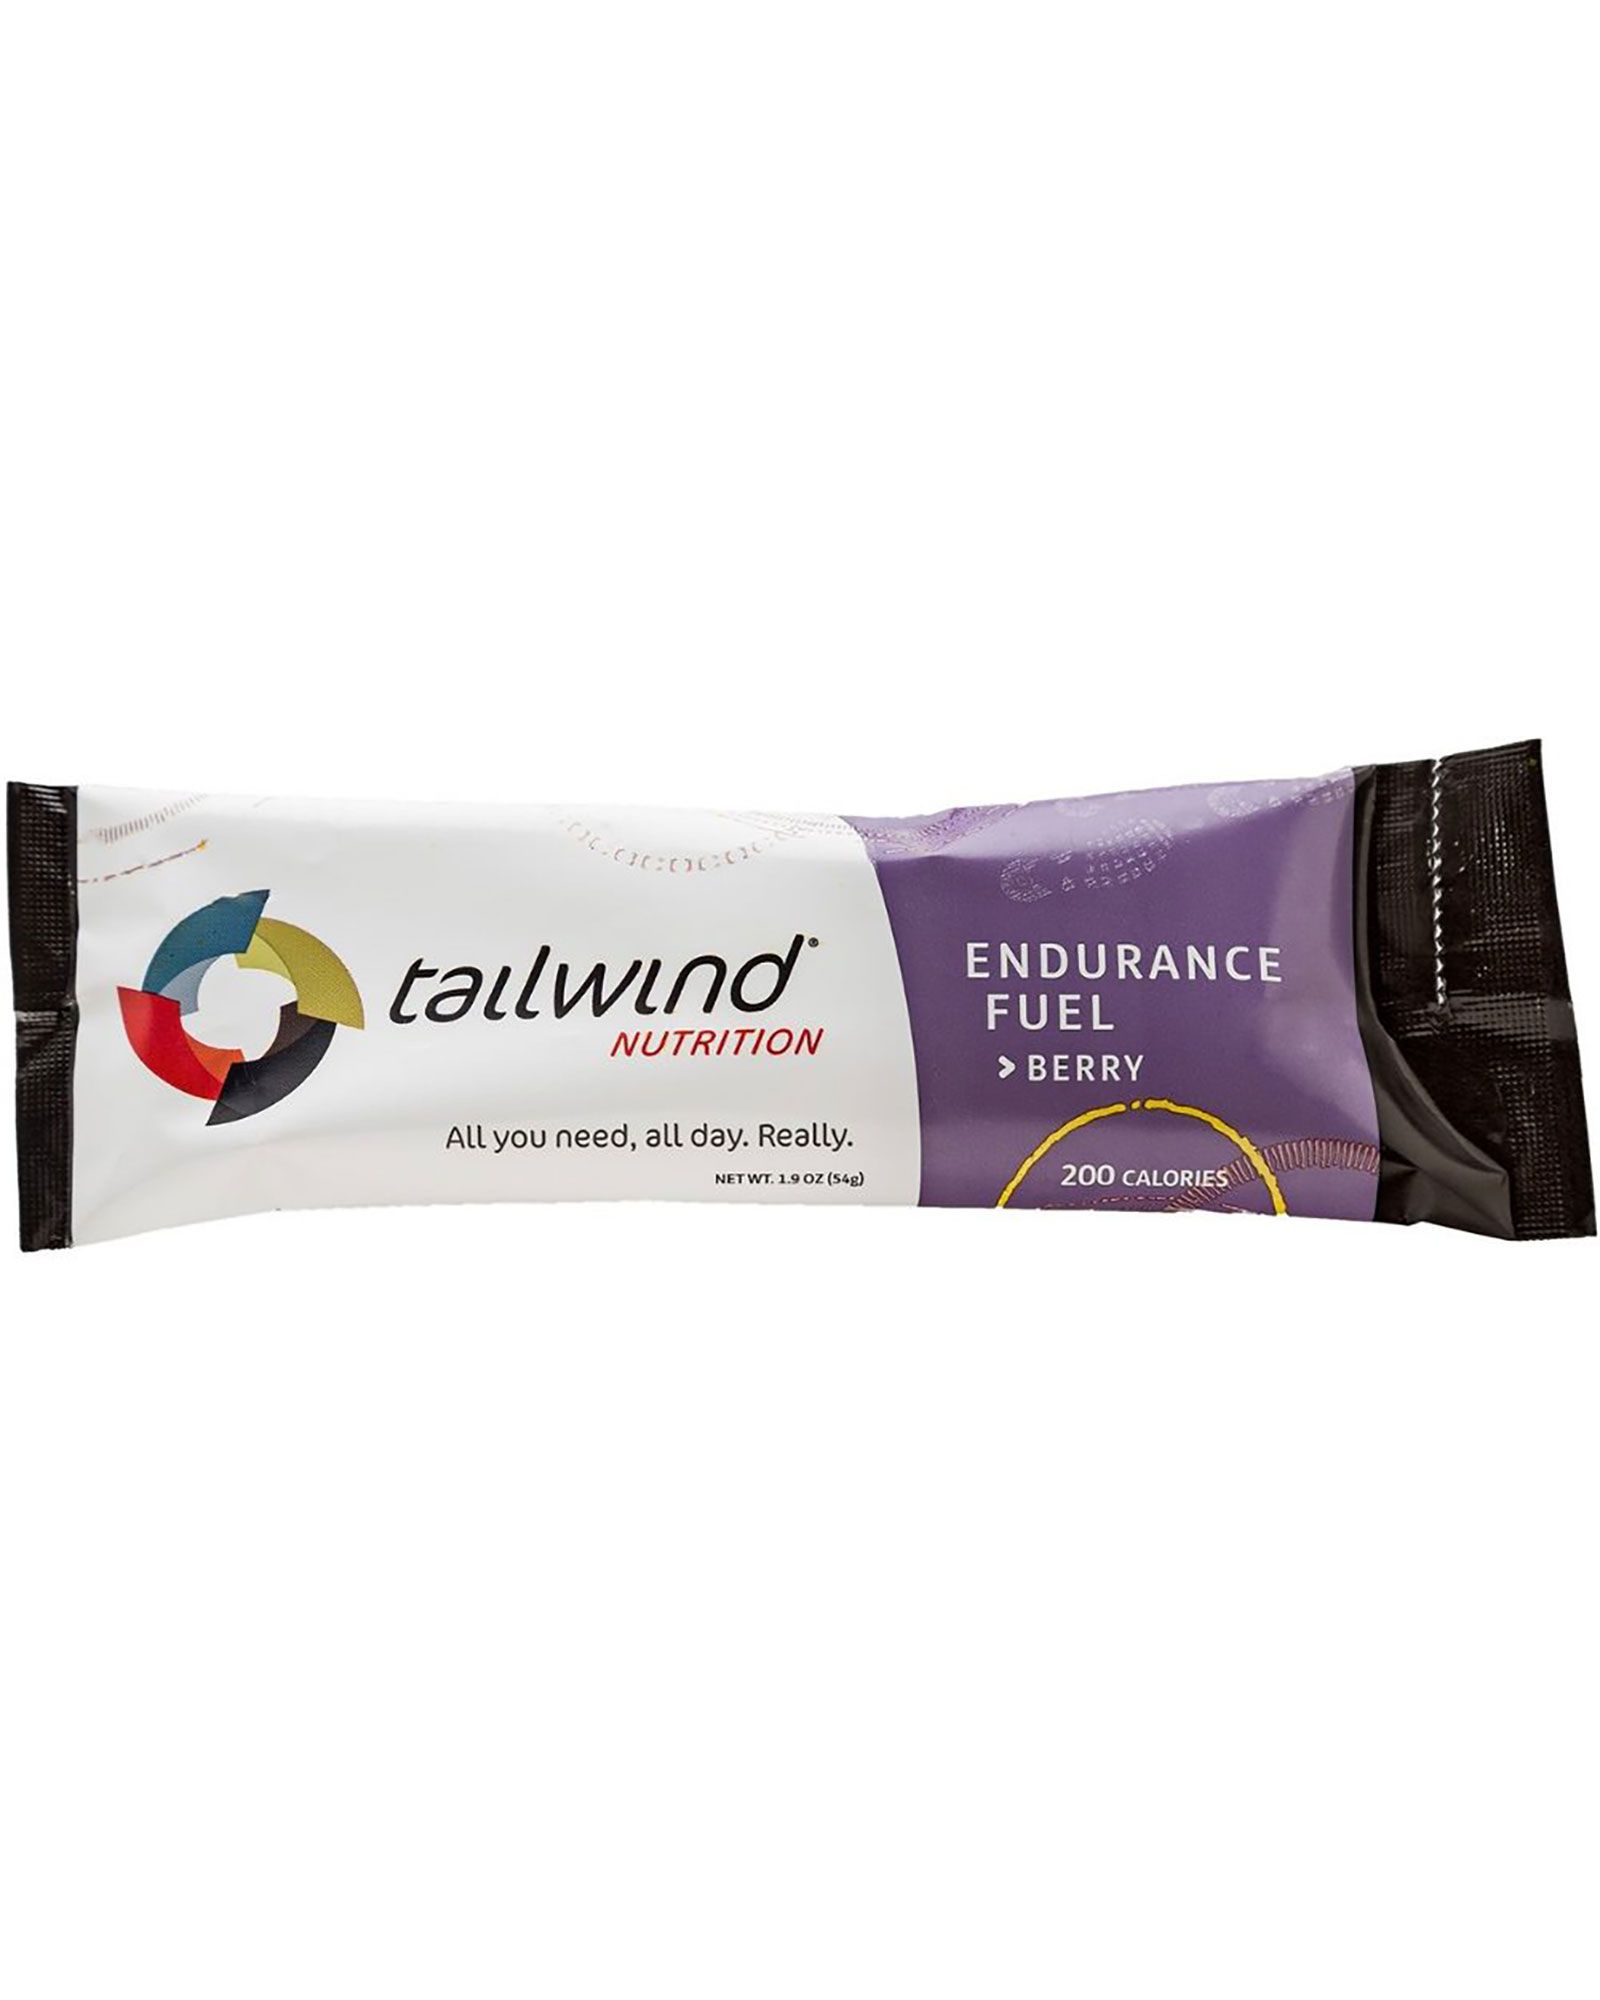 Tailwind Endurance Fuel   54g Sachet   Berry Sports Nutrition - Berry